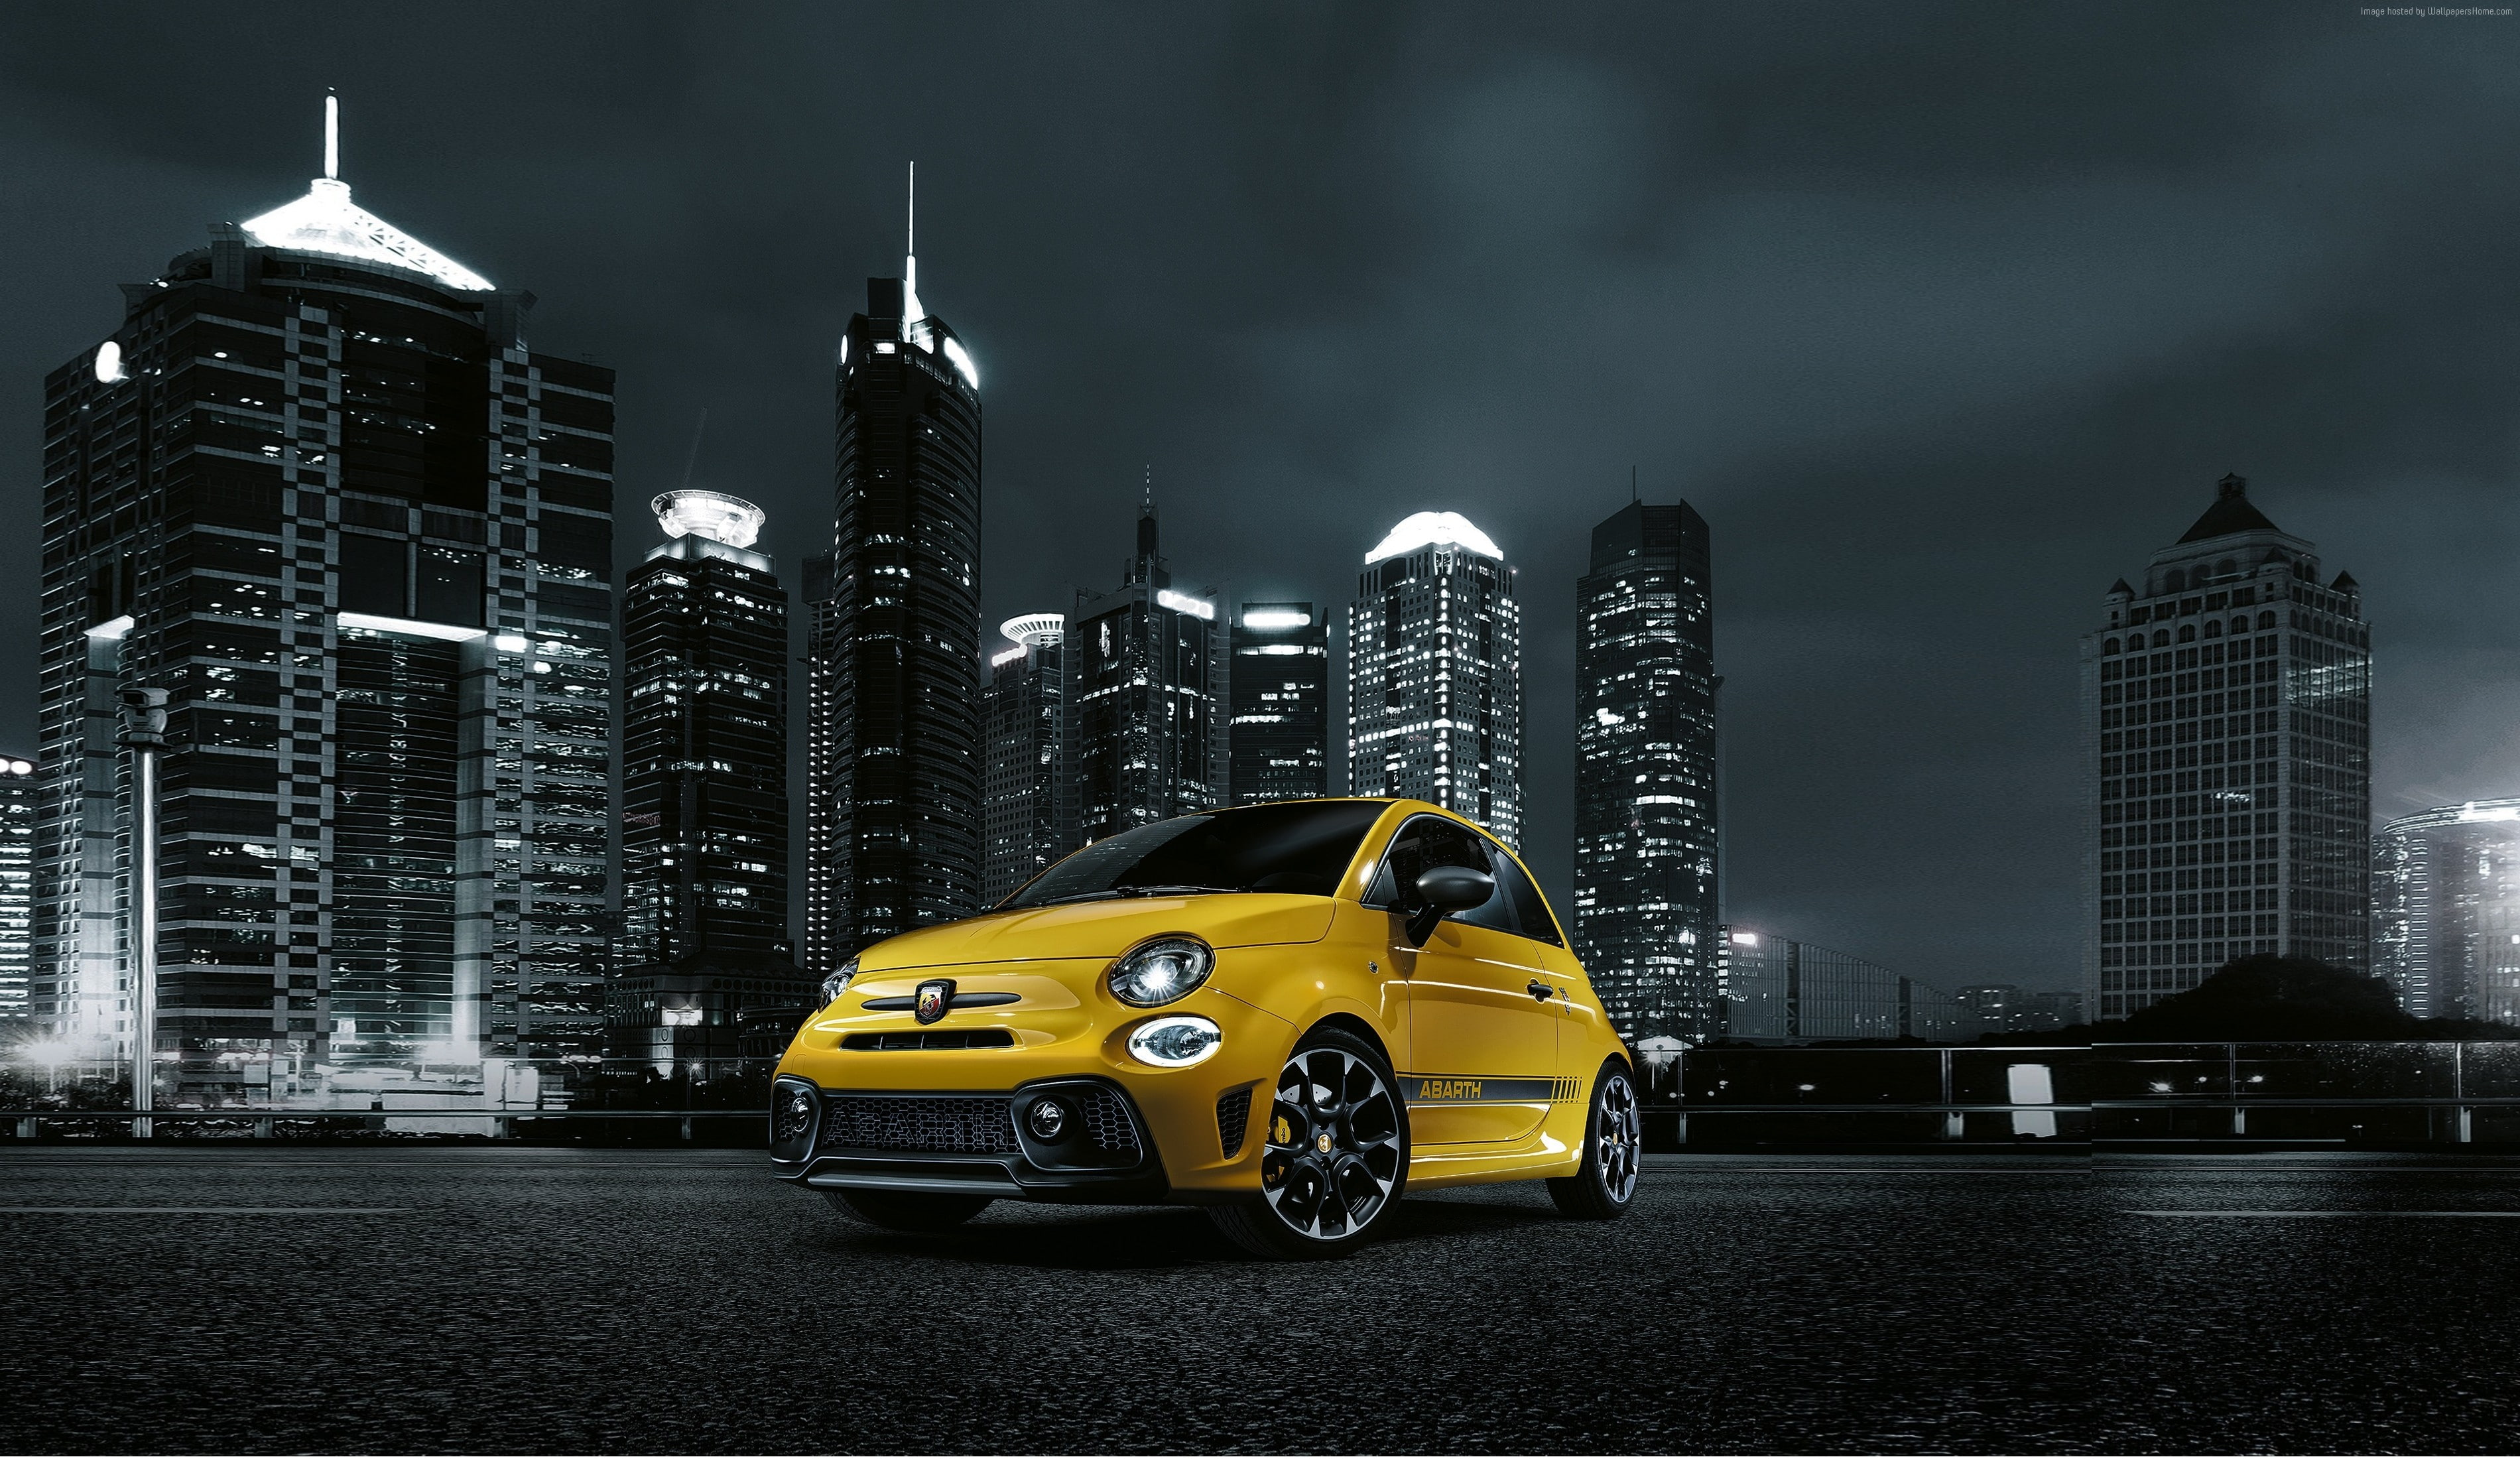 Fiat Abarth 595 Facelift, hatchback, night town, mode of transportation